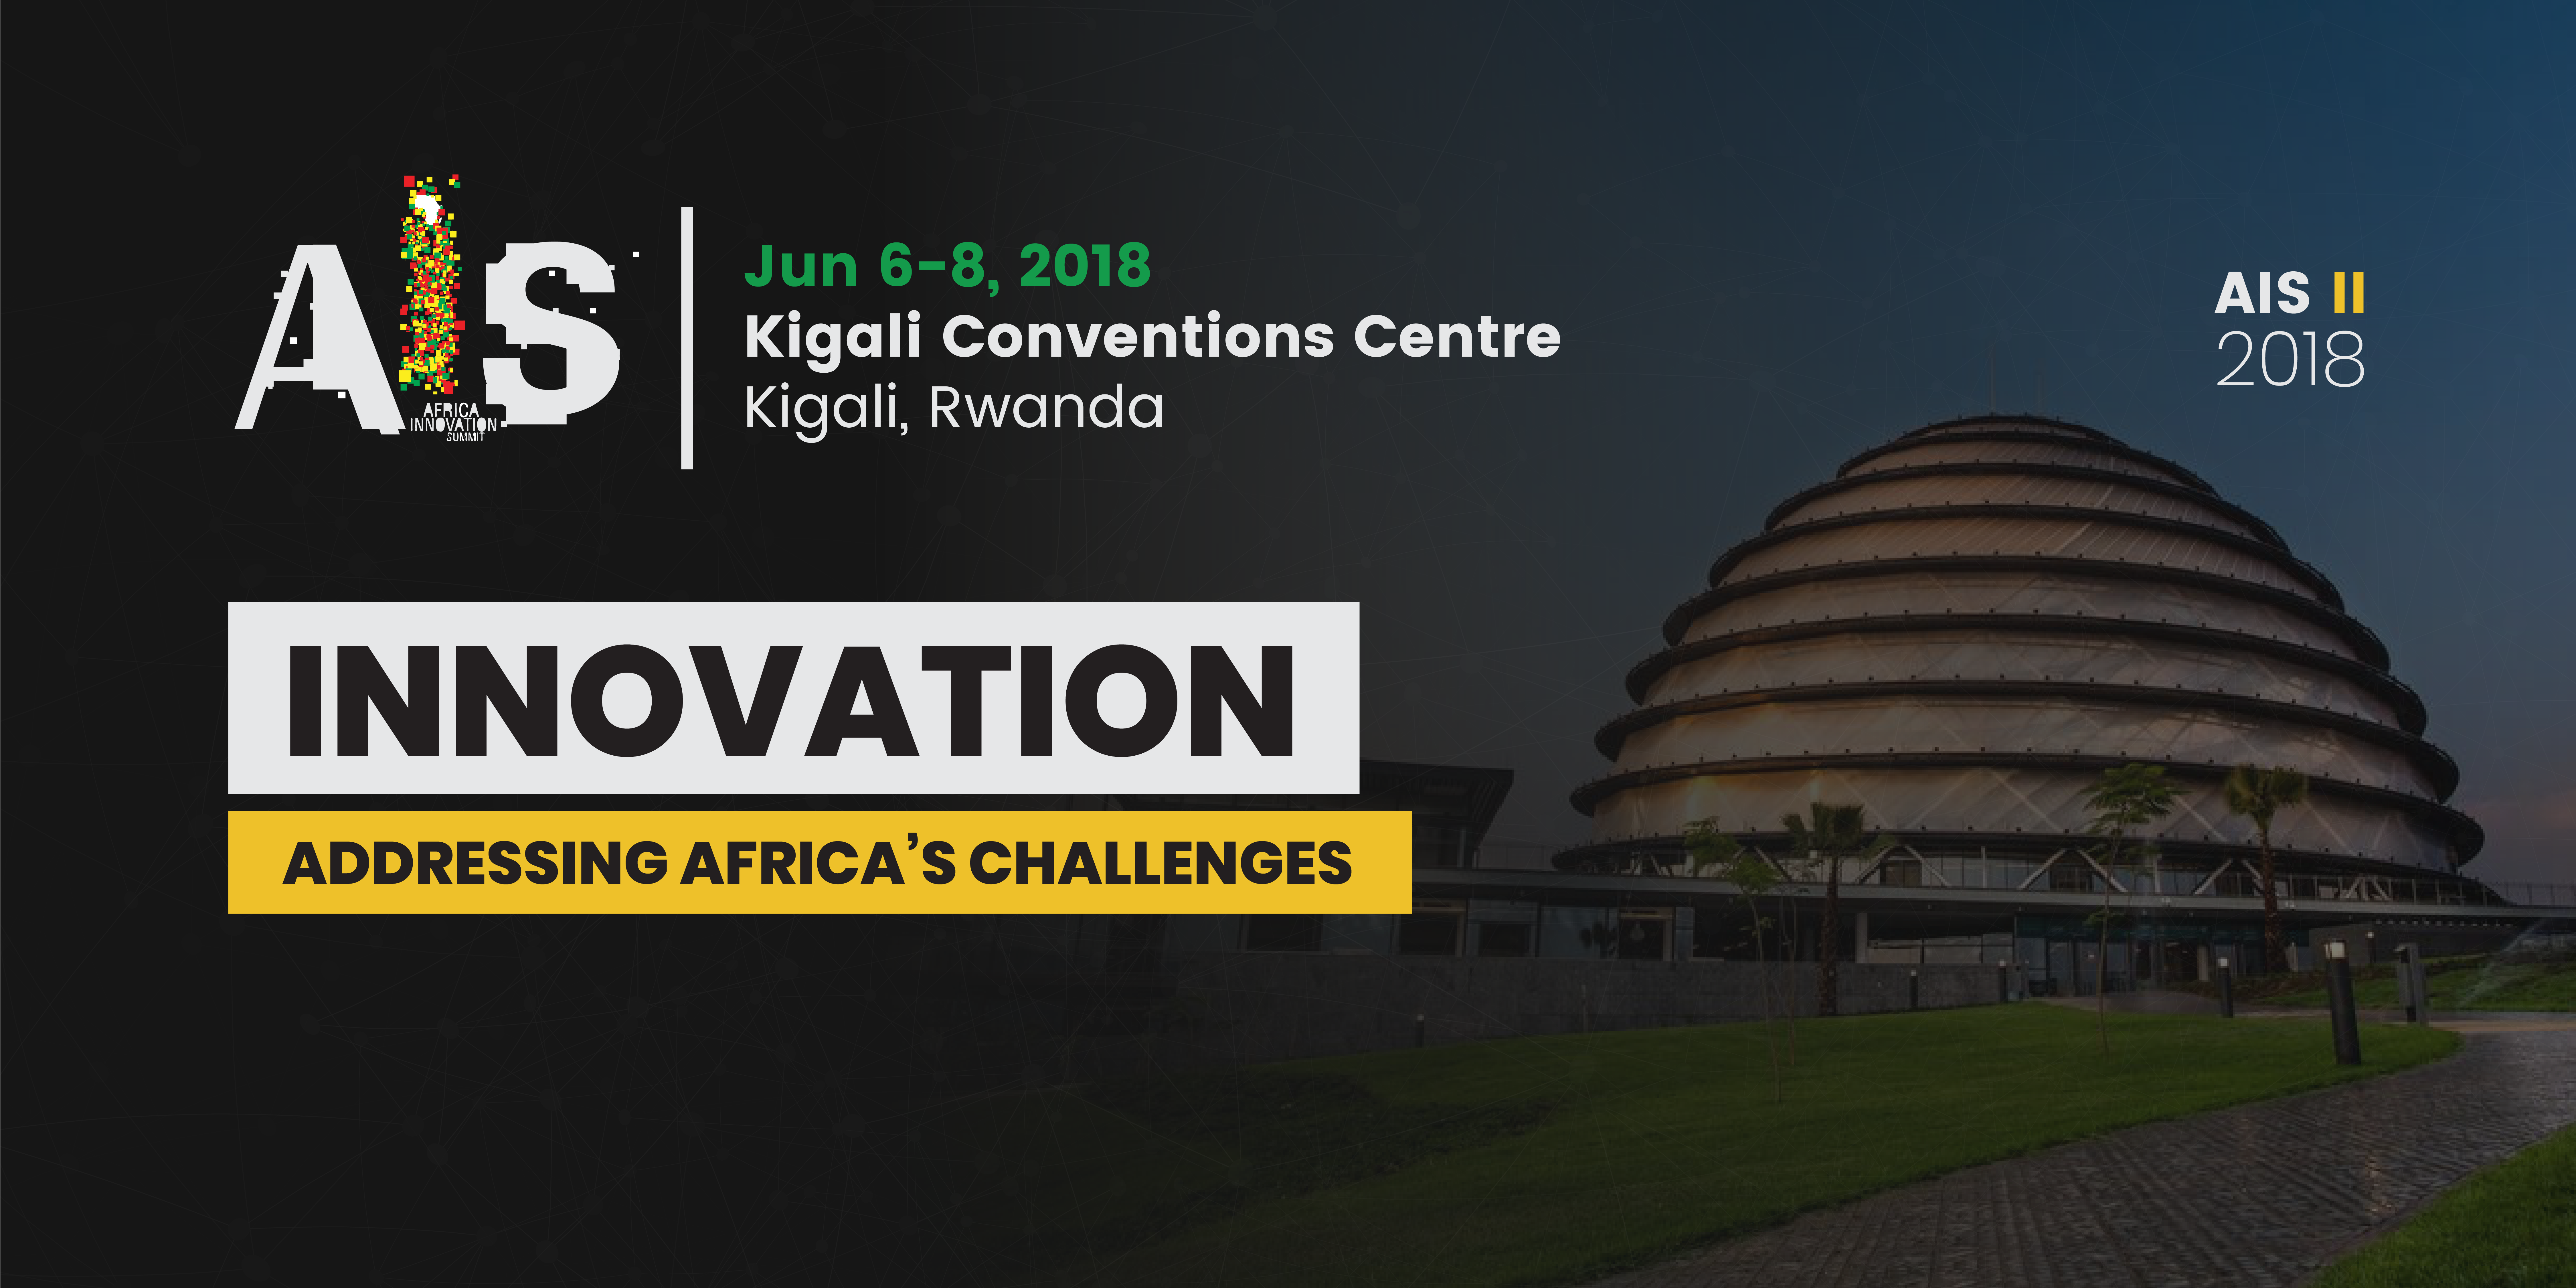 [Deadline Reminder] #AIS2018 Call For Innovations Addressing Africa’s Challenges. Deadline: April 15, 2018